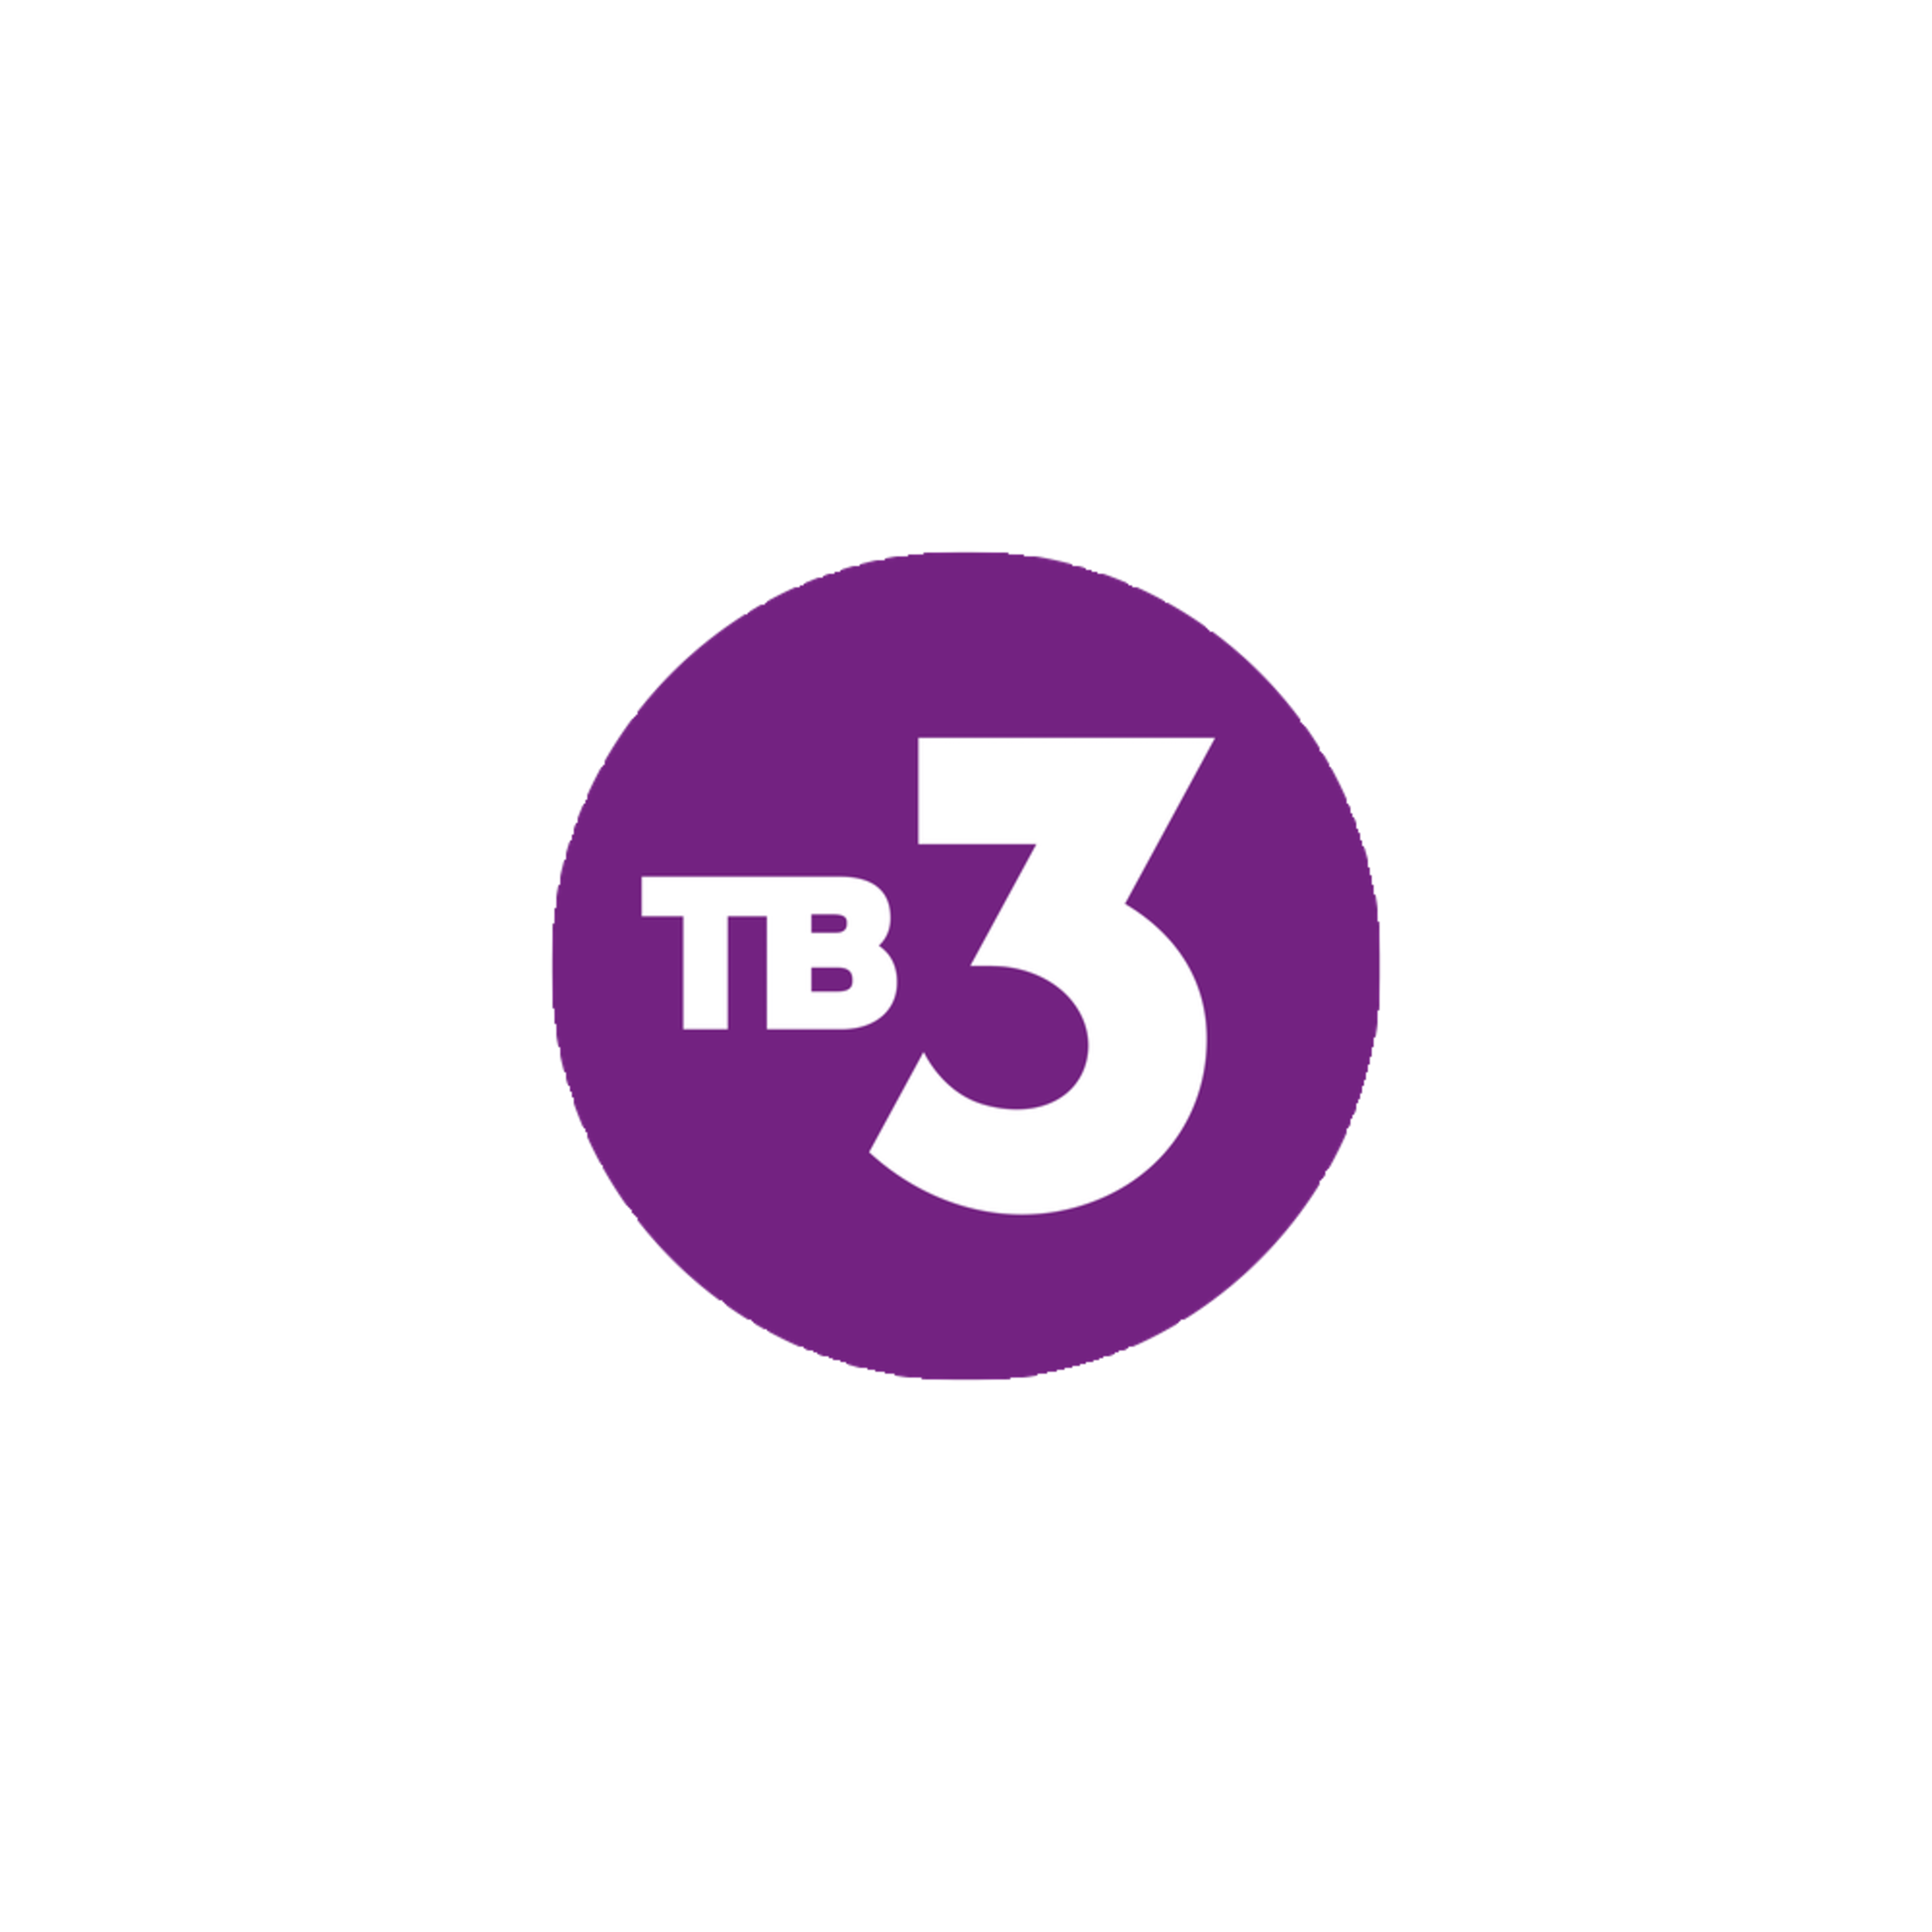 Тв 3 телефон. Тв3 логотип. Телеканал тв3. Логотип канала тв3. 3 Канал.